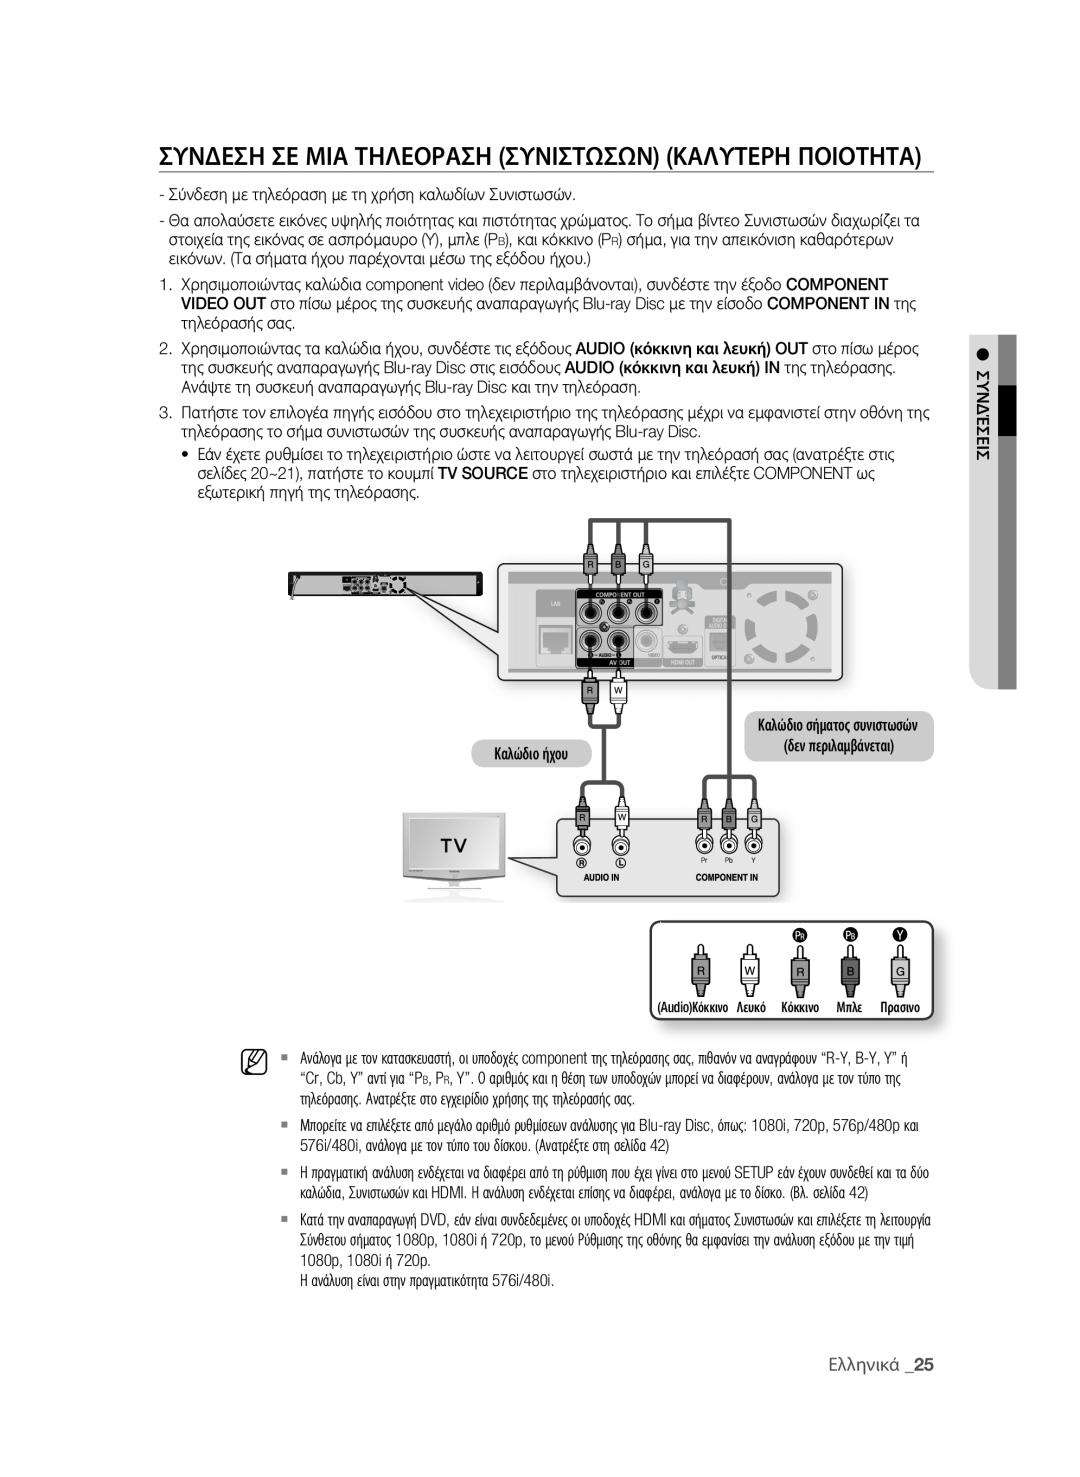 Samsung BD-P1580/EDC manual σΥΝδεση σε ΜιΑ ΤηΛεορΑση σΥΝισΤΩσΩΝ ΚΑΛΥΤερη ΠοιοΤηΤΑ, Ελληνικά 2 